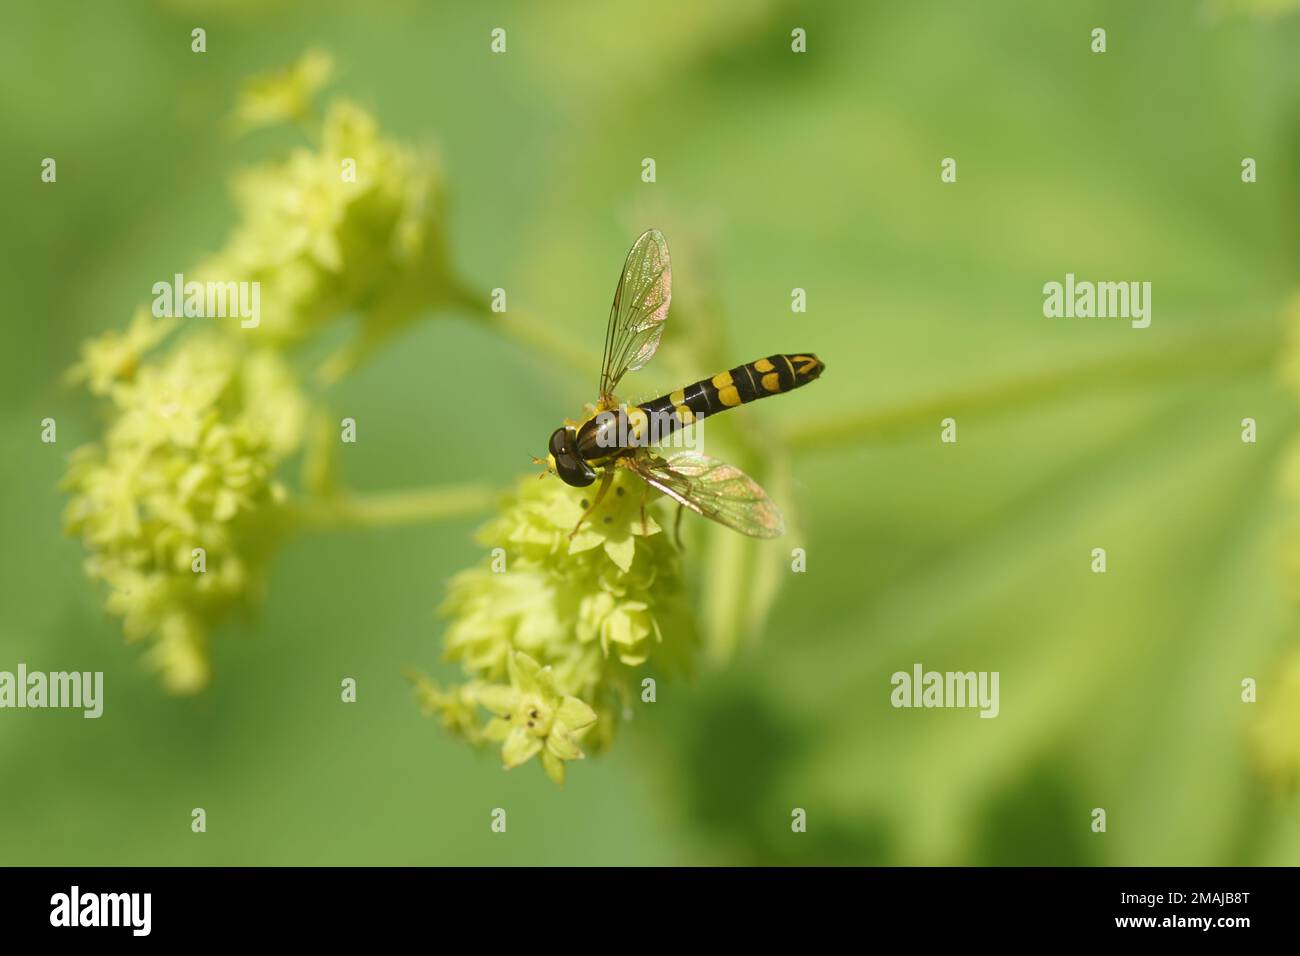 Closeup of a male hoverfly Sphaerophoria, probably Sphaerophoria scripta, family Syrphidae on blurred flowers of Lady's Mantle (Alchemilla vulgaris), Stock Photo